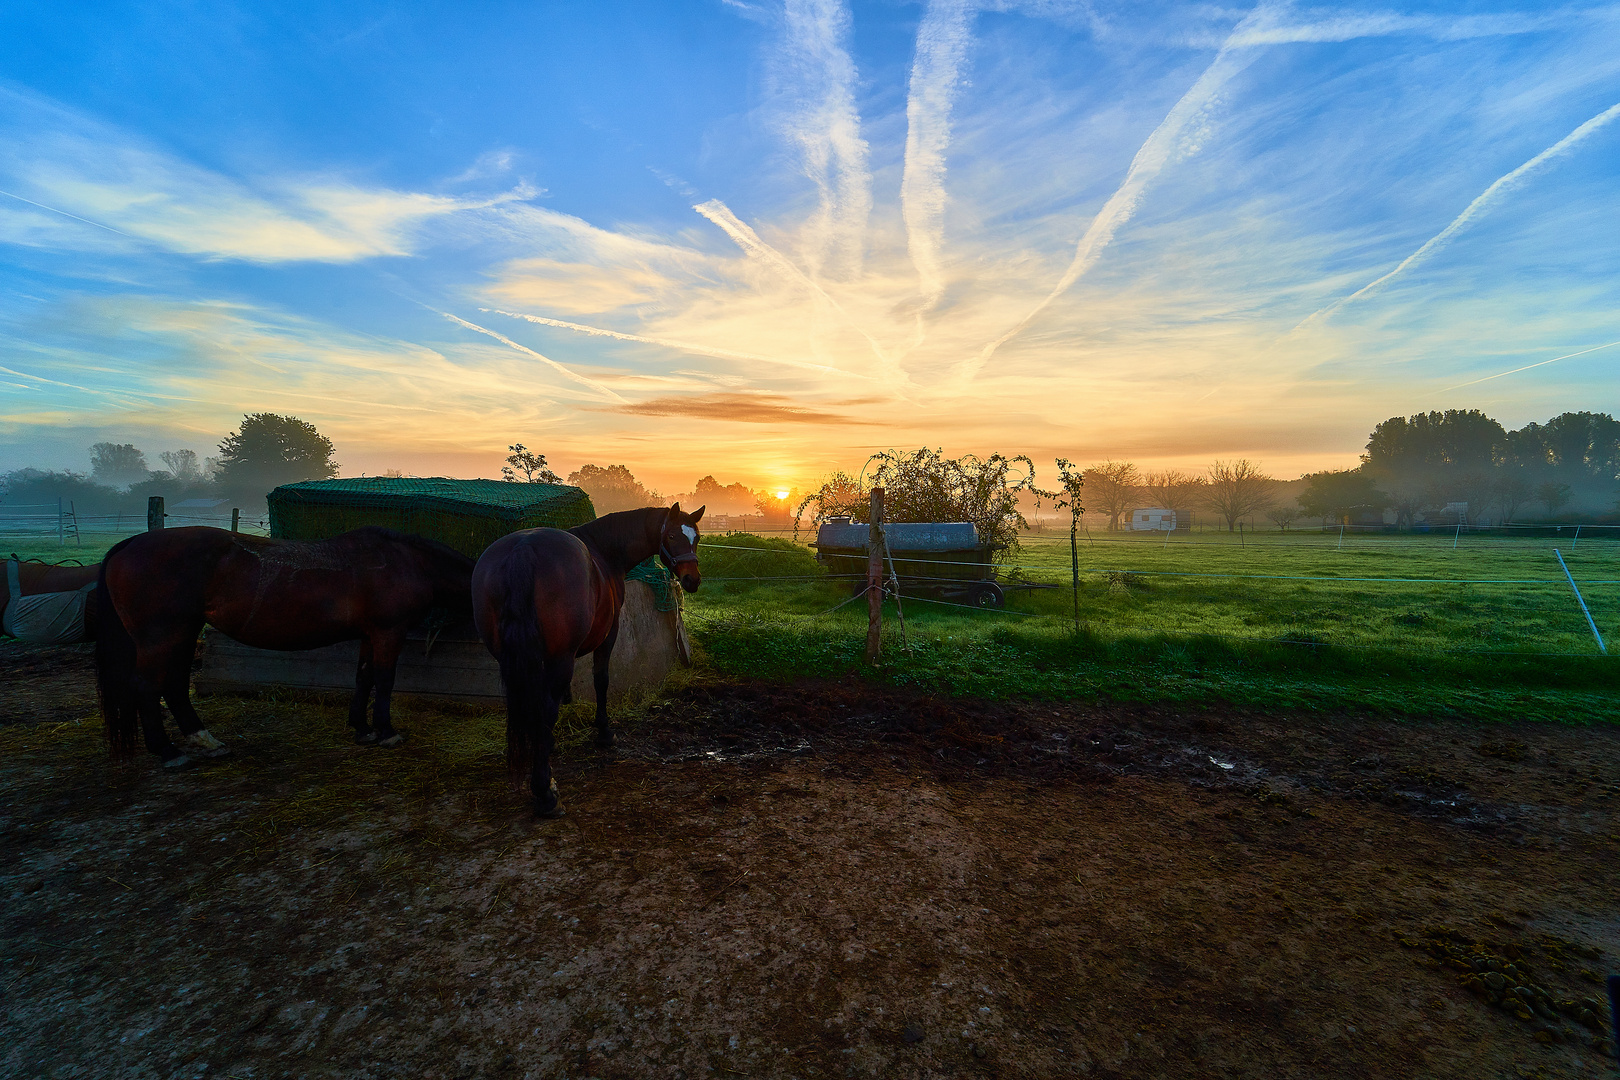 Sonnenaufgang bei den Pferdchen 